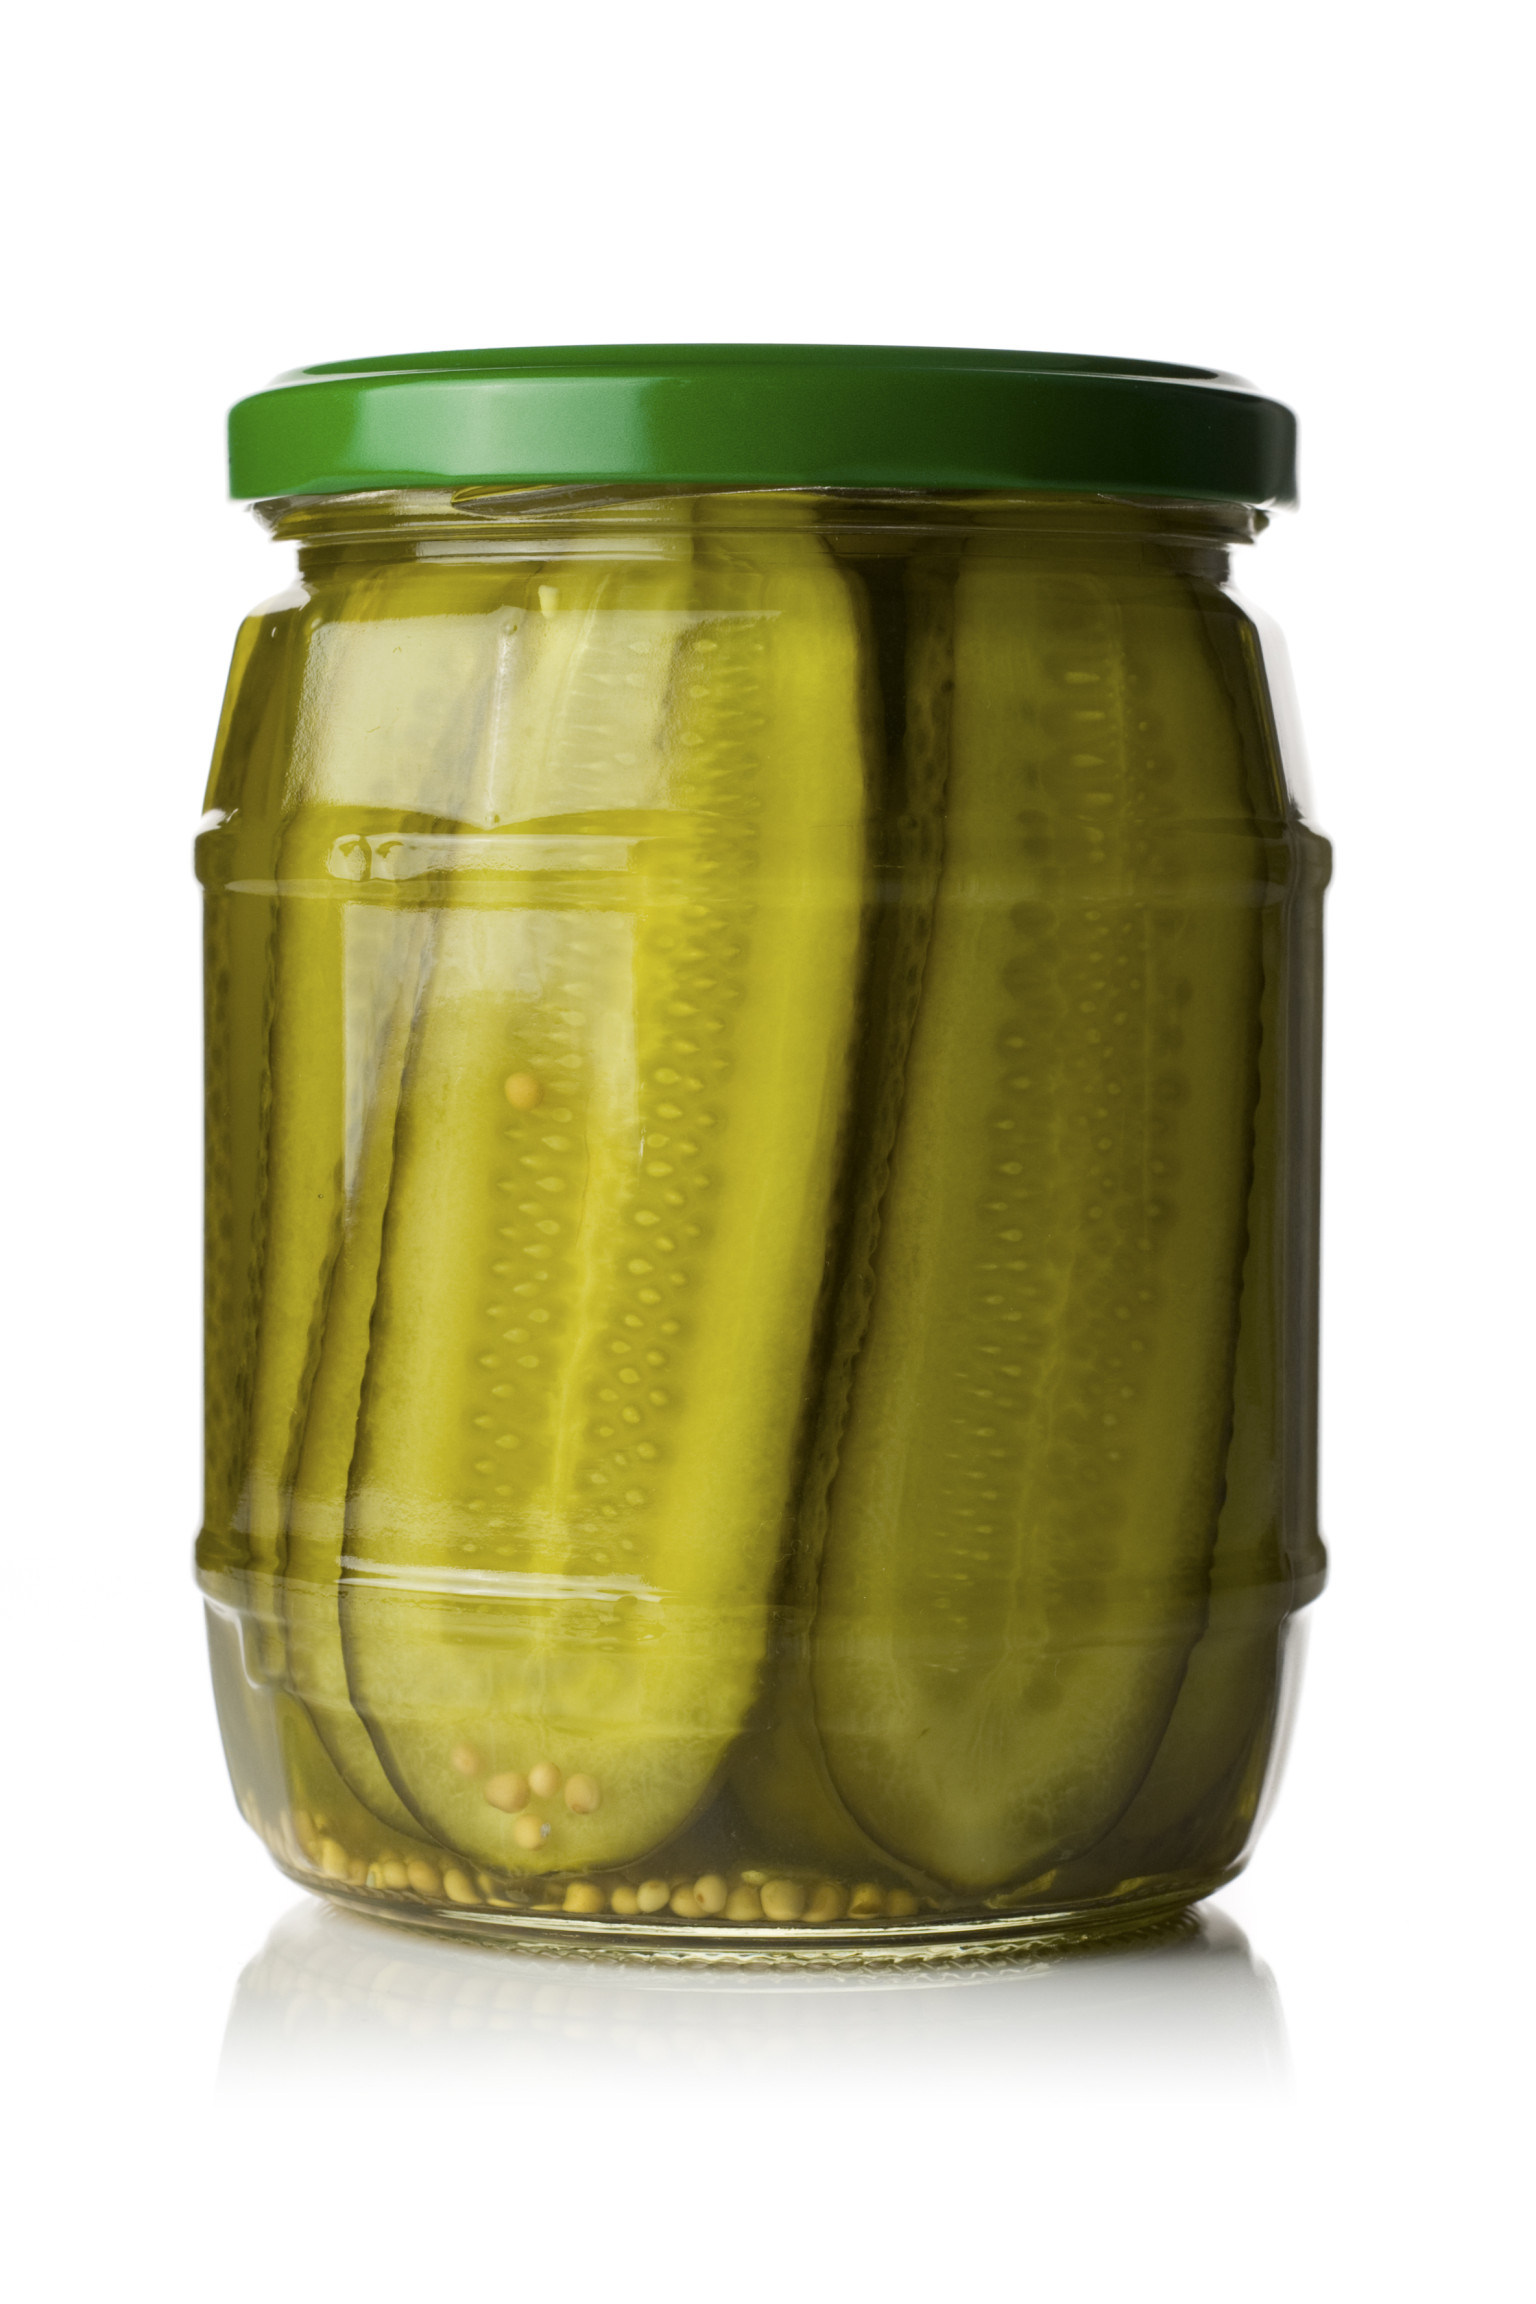 Sexist Pickle Jar | Warehouse 13 Artifact Database Wiki | FANDOM powered by Wikia